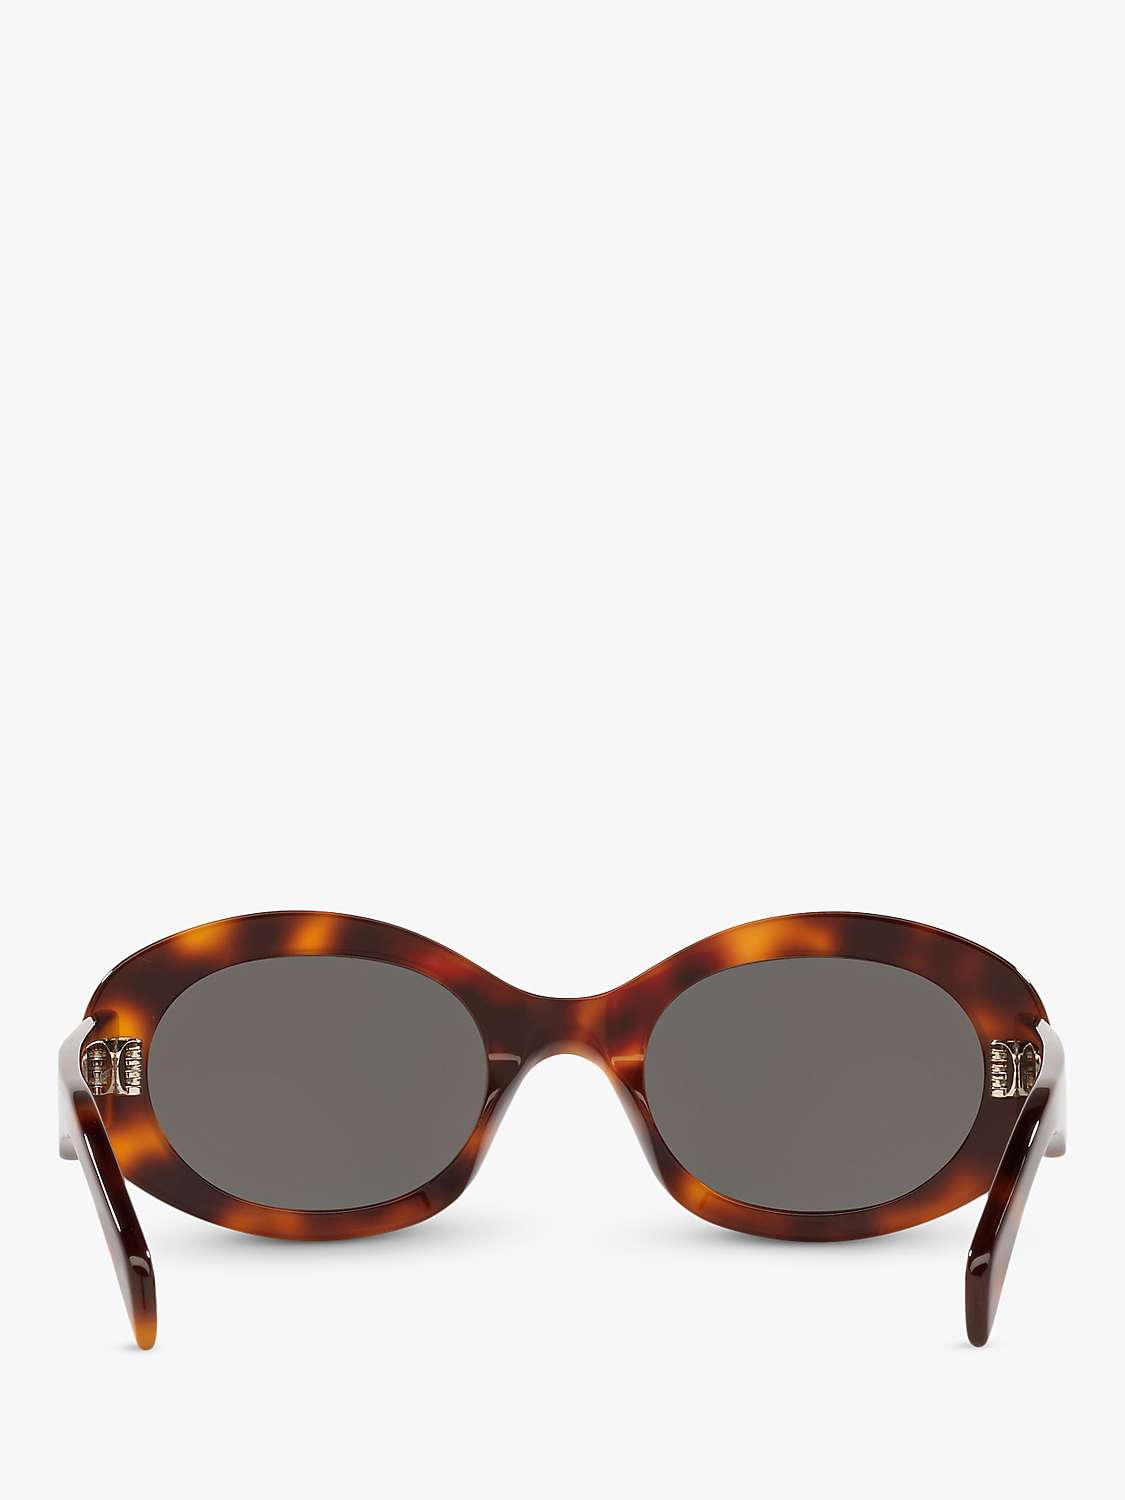 Buy Celine CL40194U Women's Oval Sunglasses, Tortoise Blonde/Grey Online at johnlewis.com